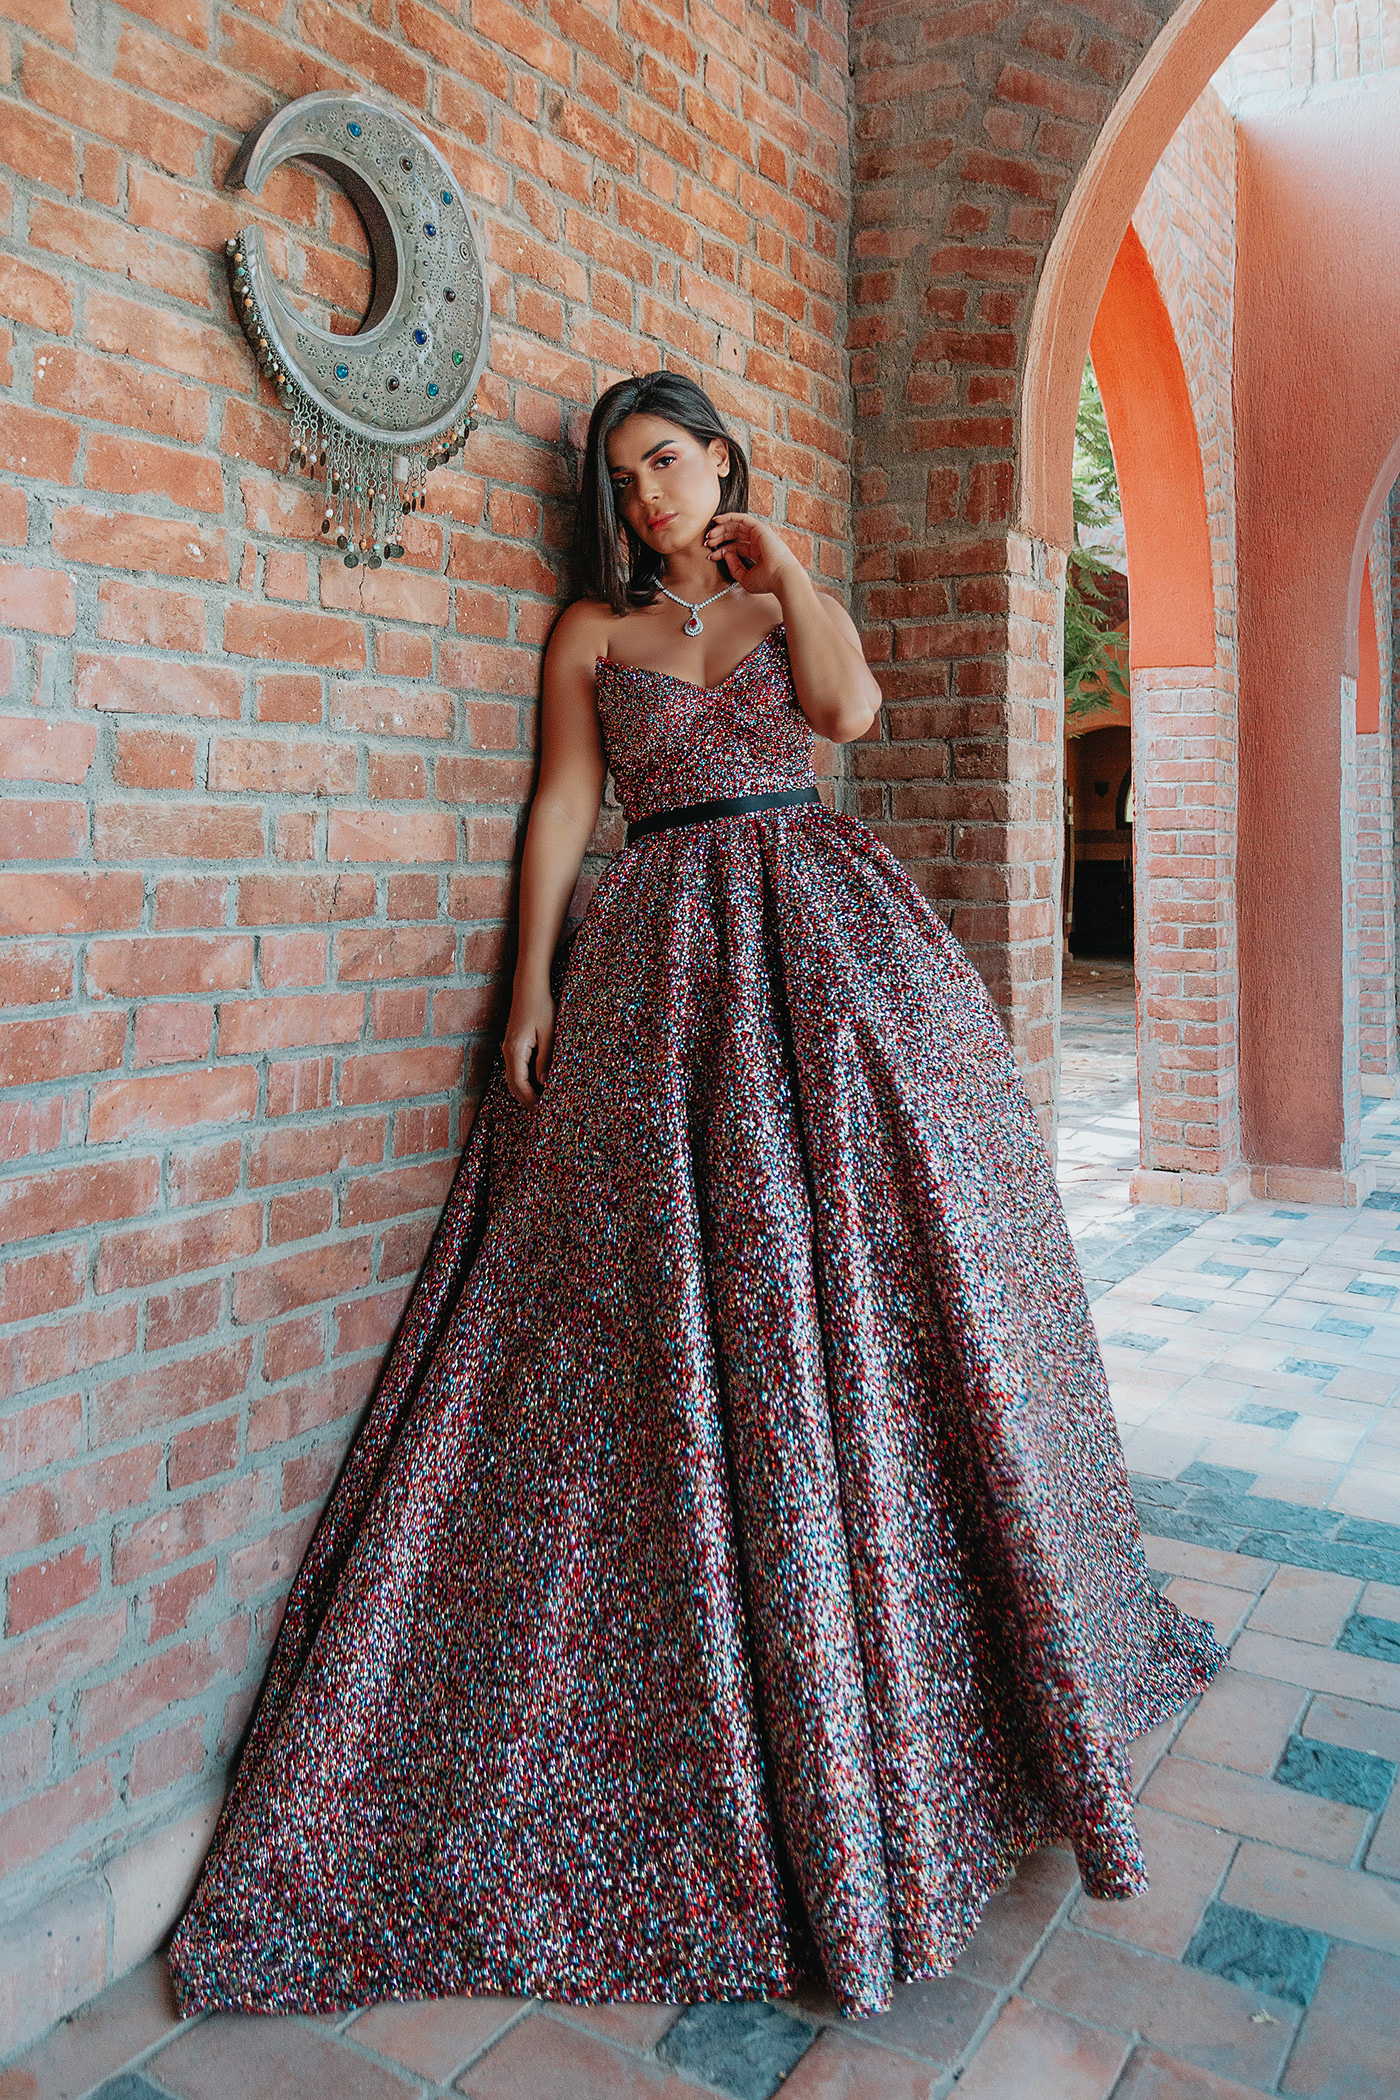 egyptian actress actress Beauty shots glamour Fashion Designer designer dress Glitter